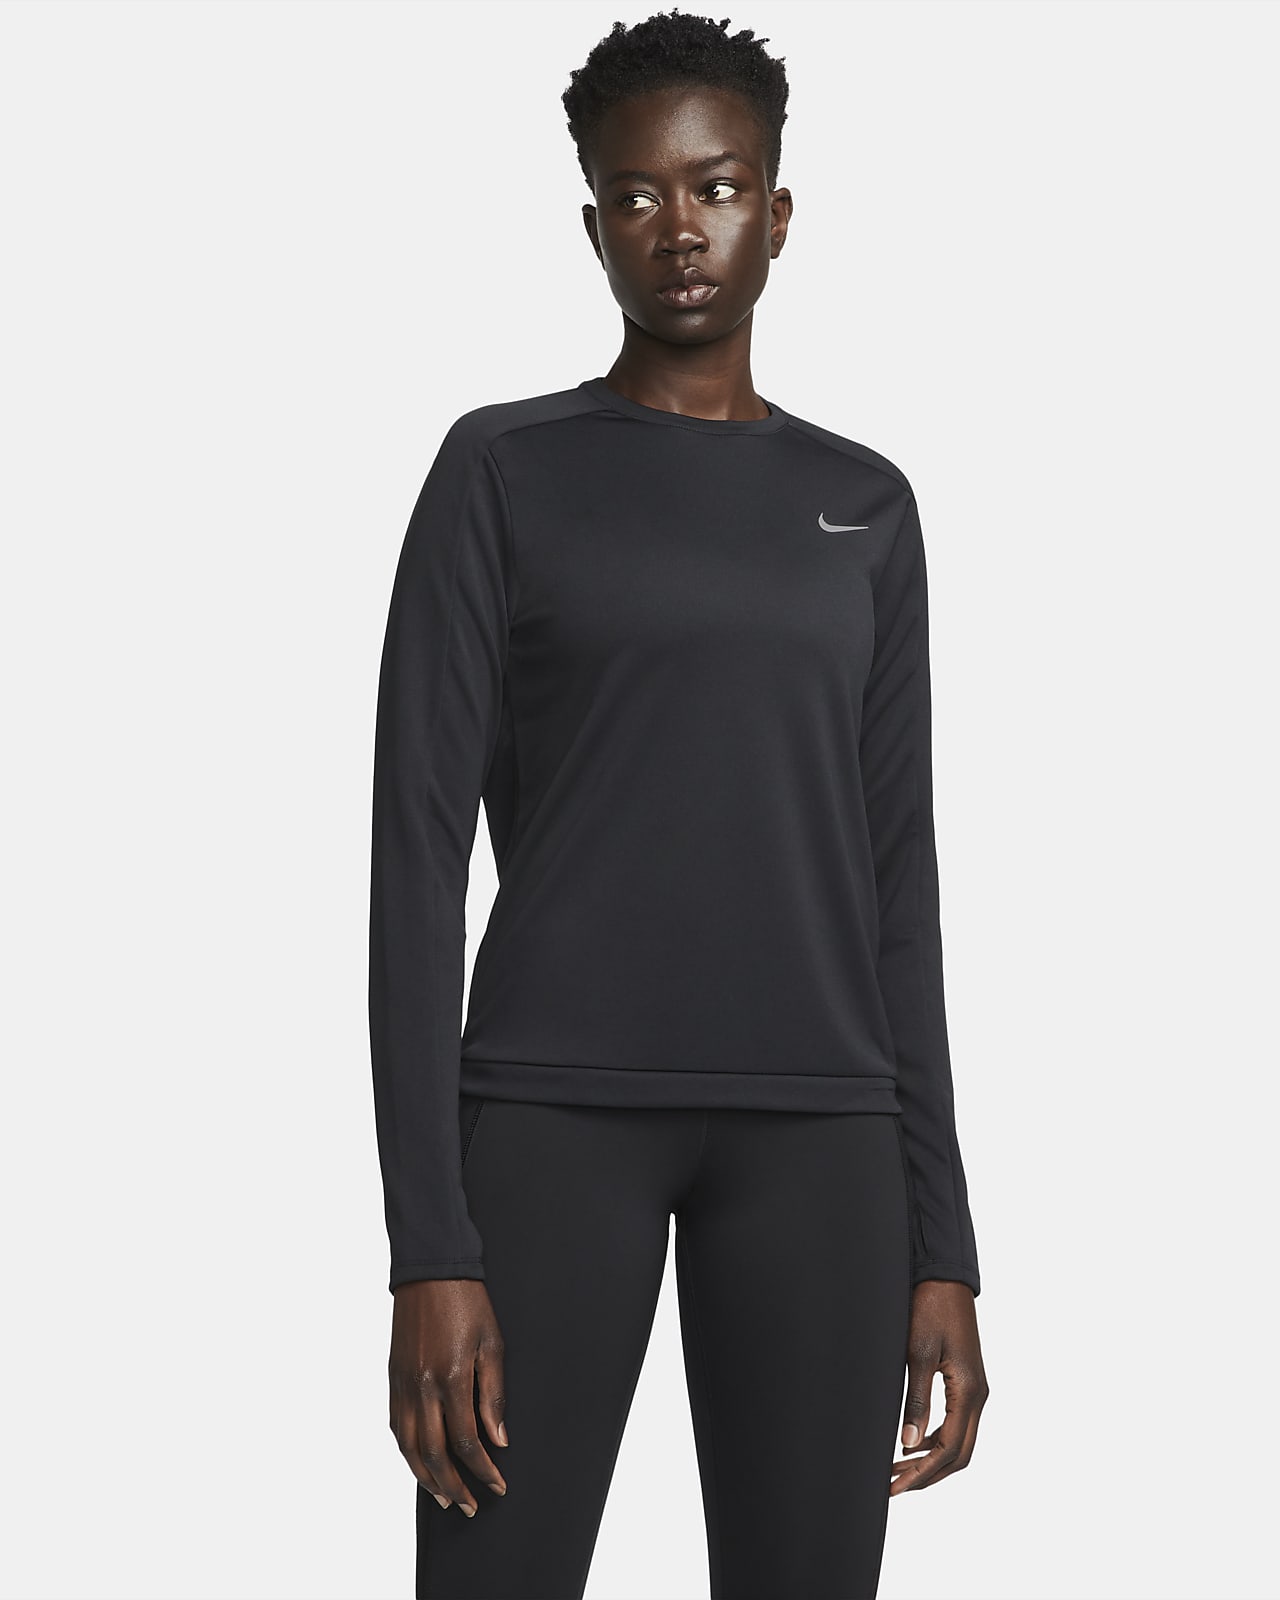 Nike Dri-FIT Women's Crew-Neck Running Top